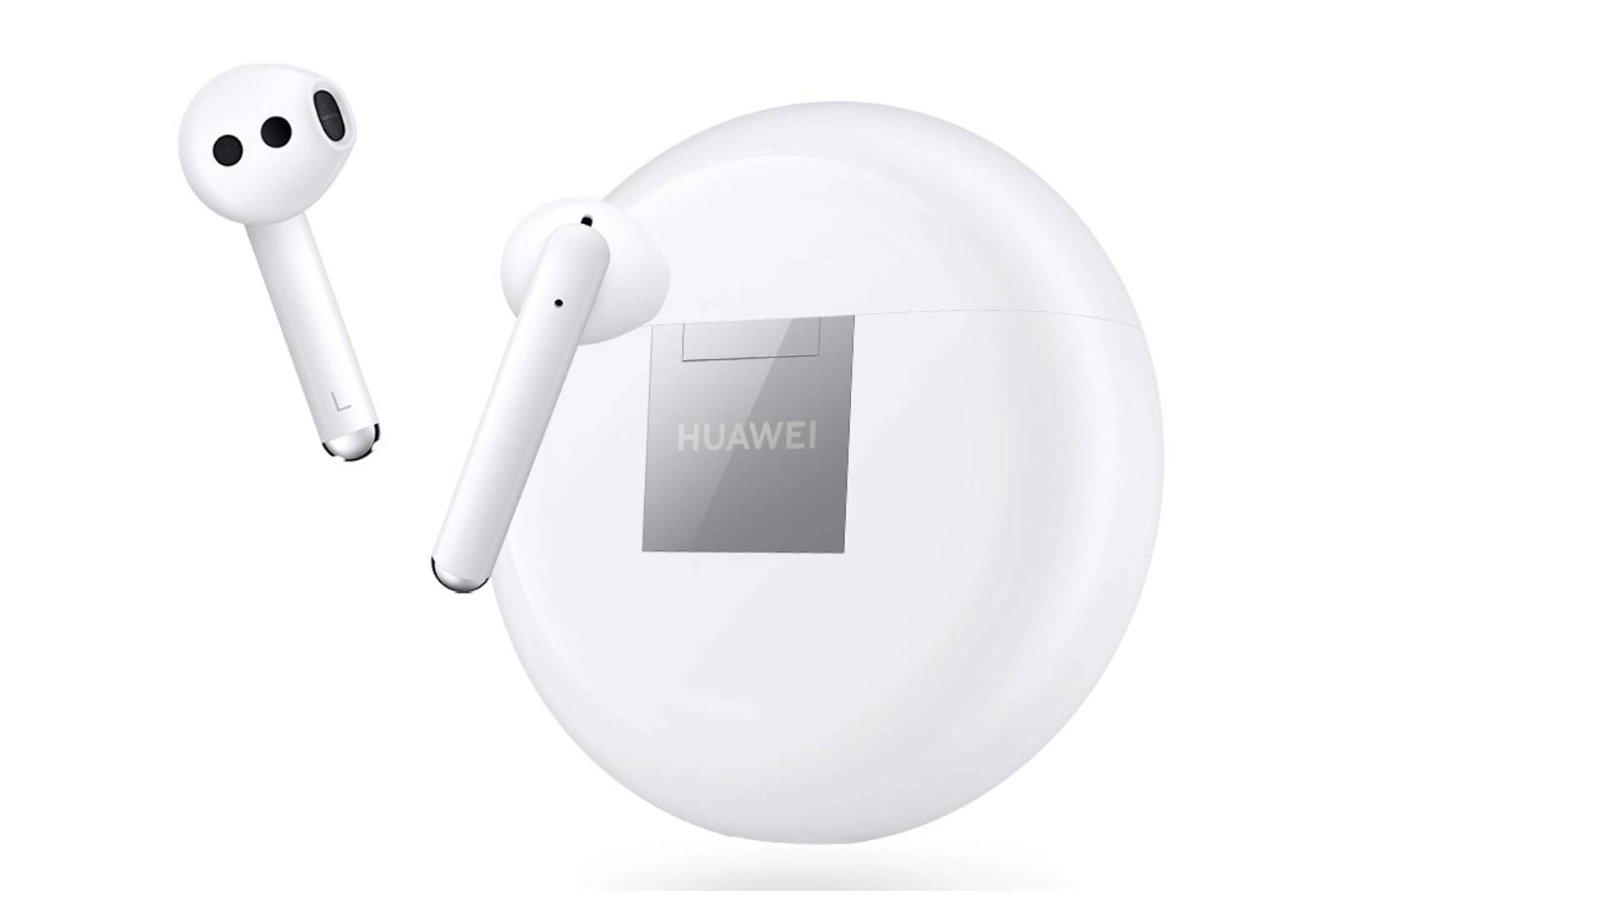 Immagine di Huawei FreeBuds 3, auricolari true wireless perfetti per le telefonate